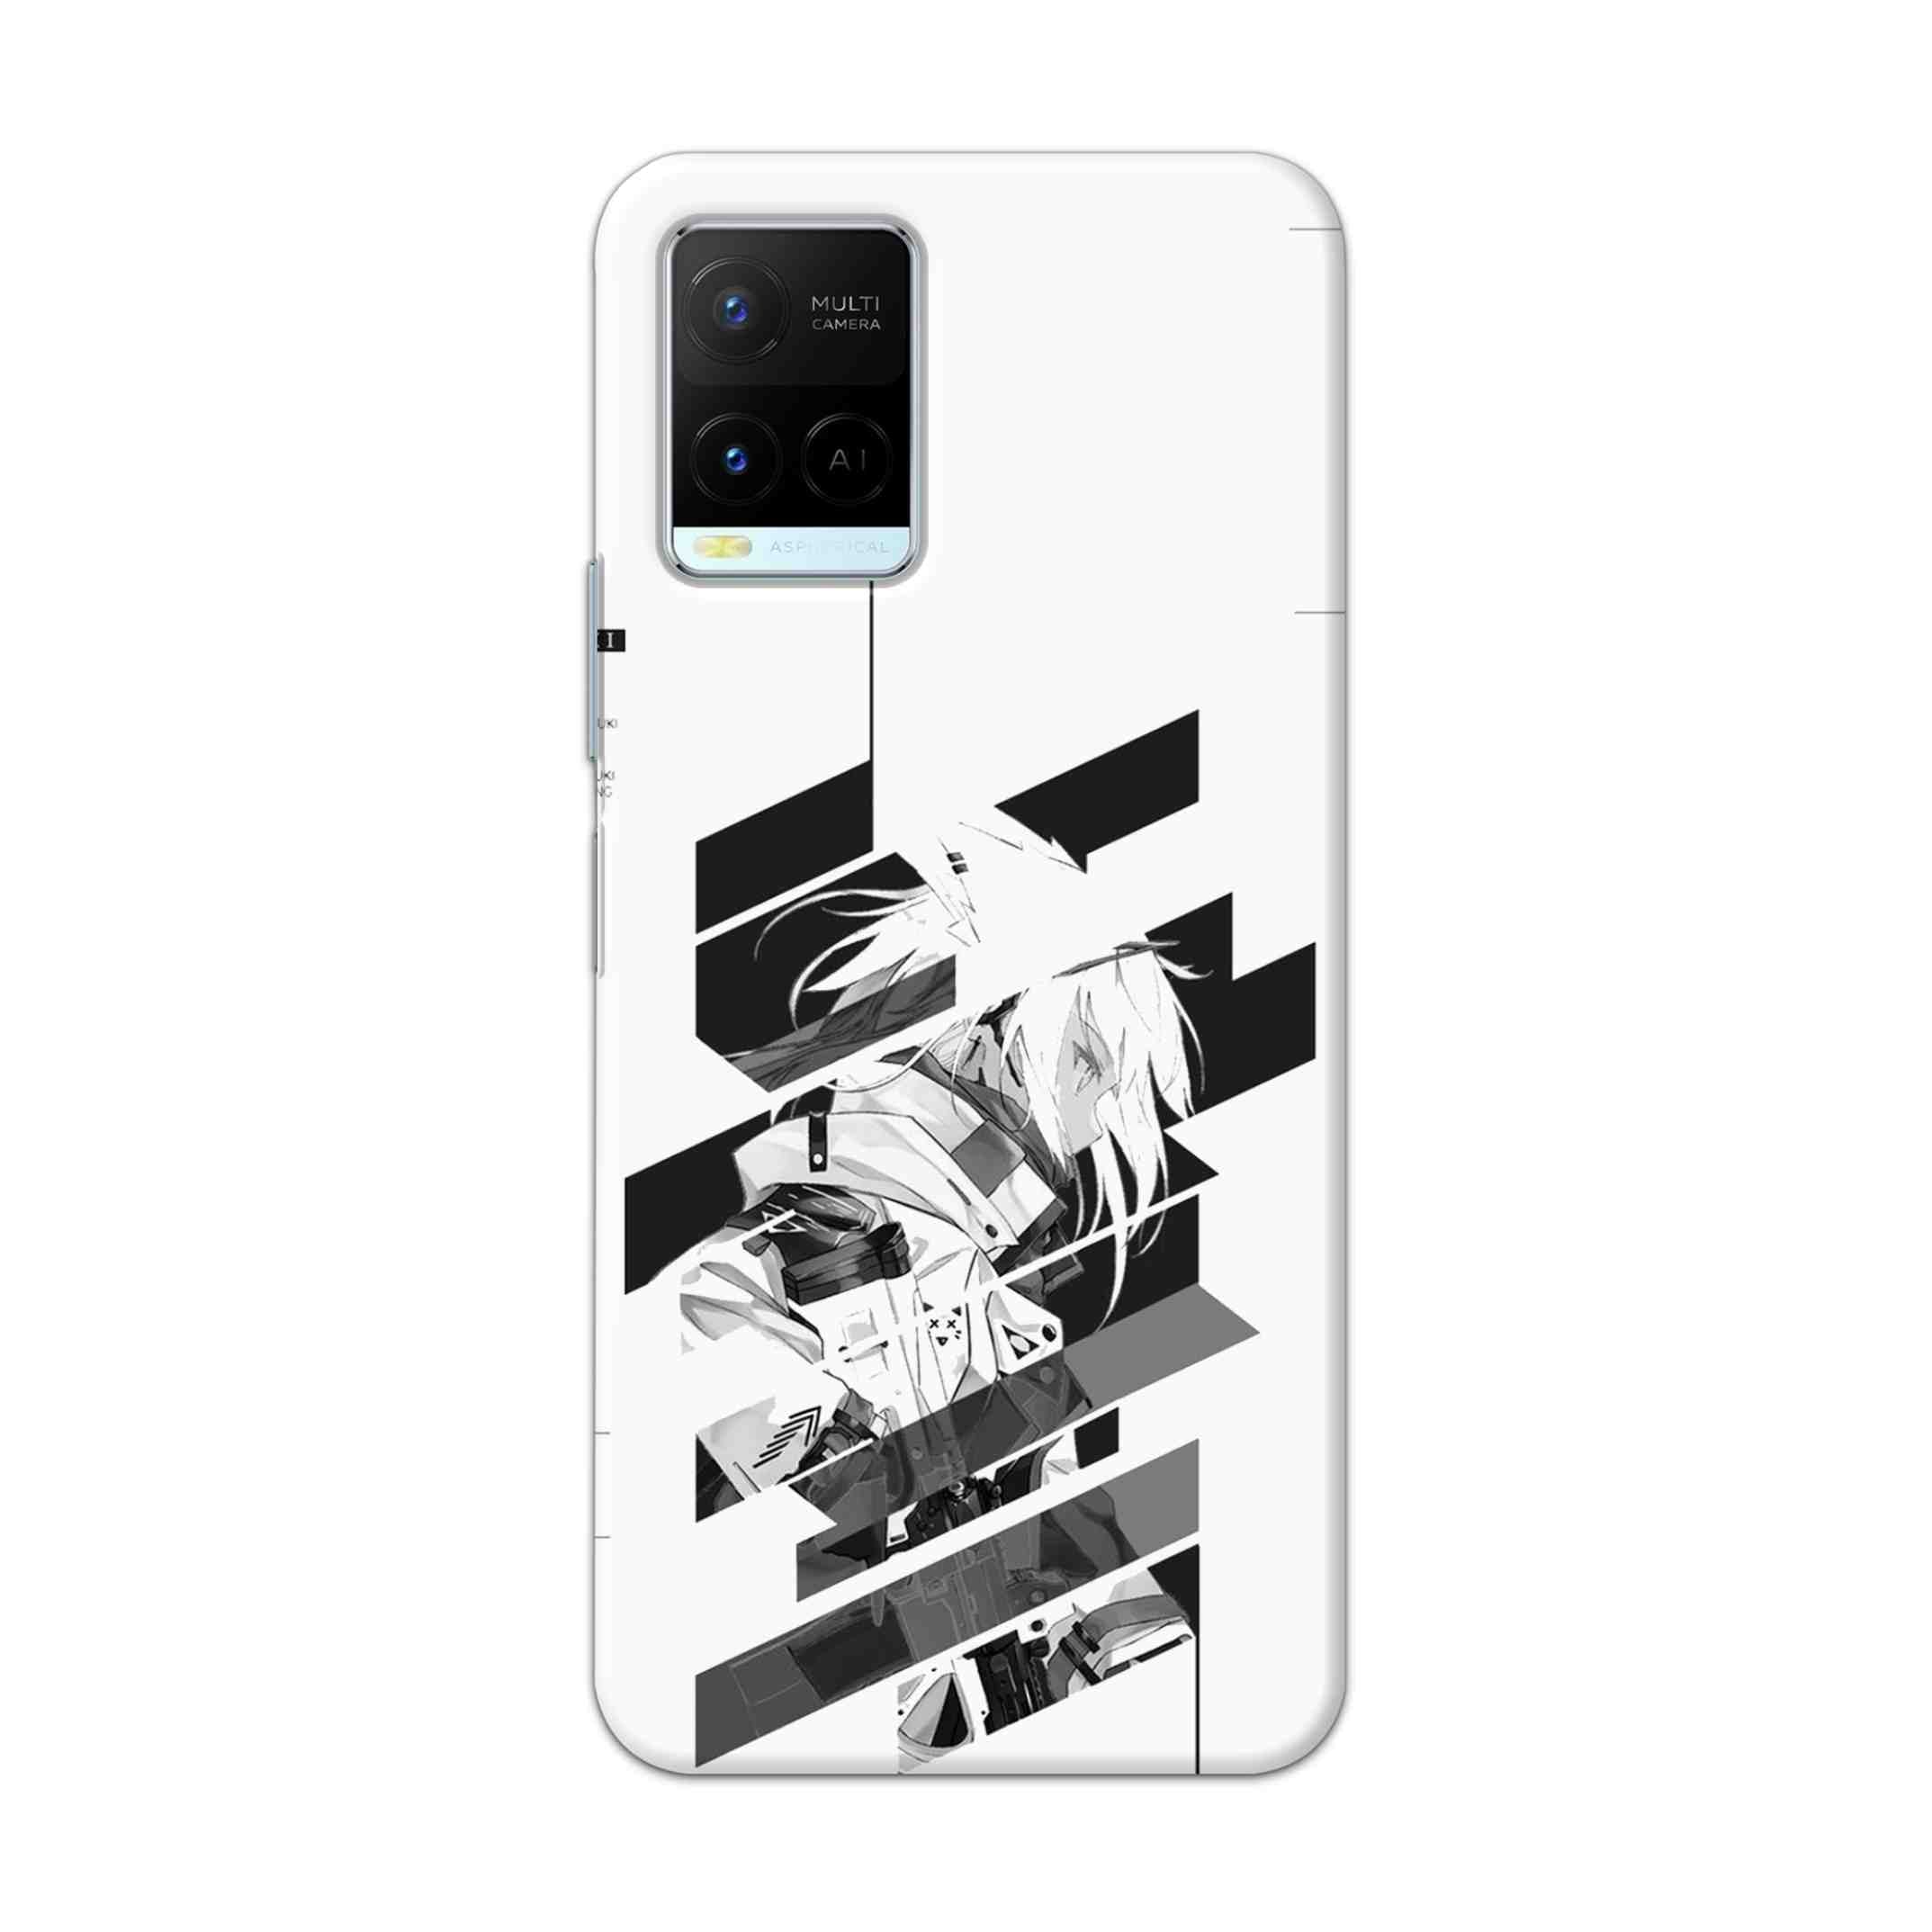 Buy Fubuki Hard Back Mobile Phone Case Cover For Vivo Y21 2021 Online